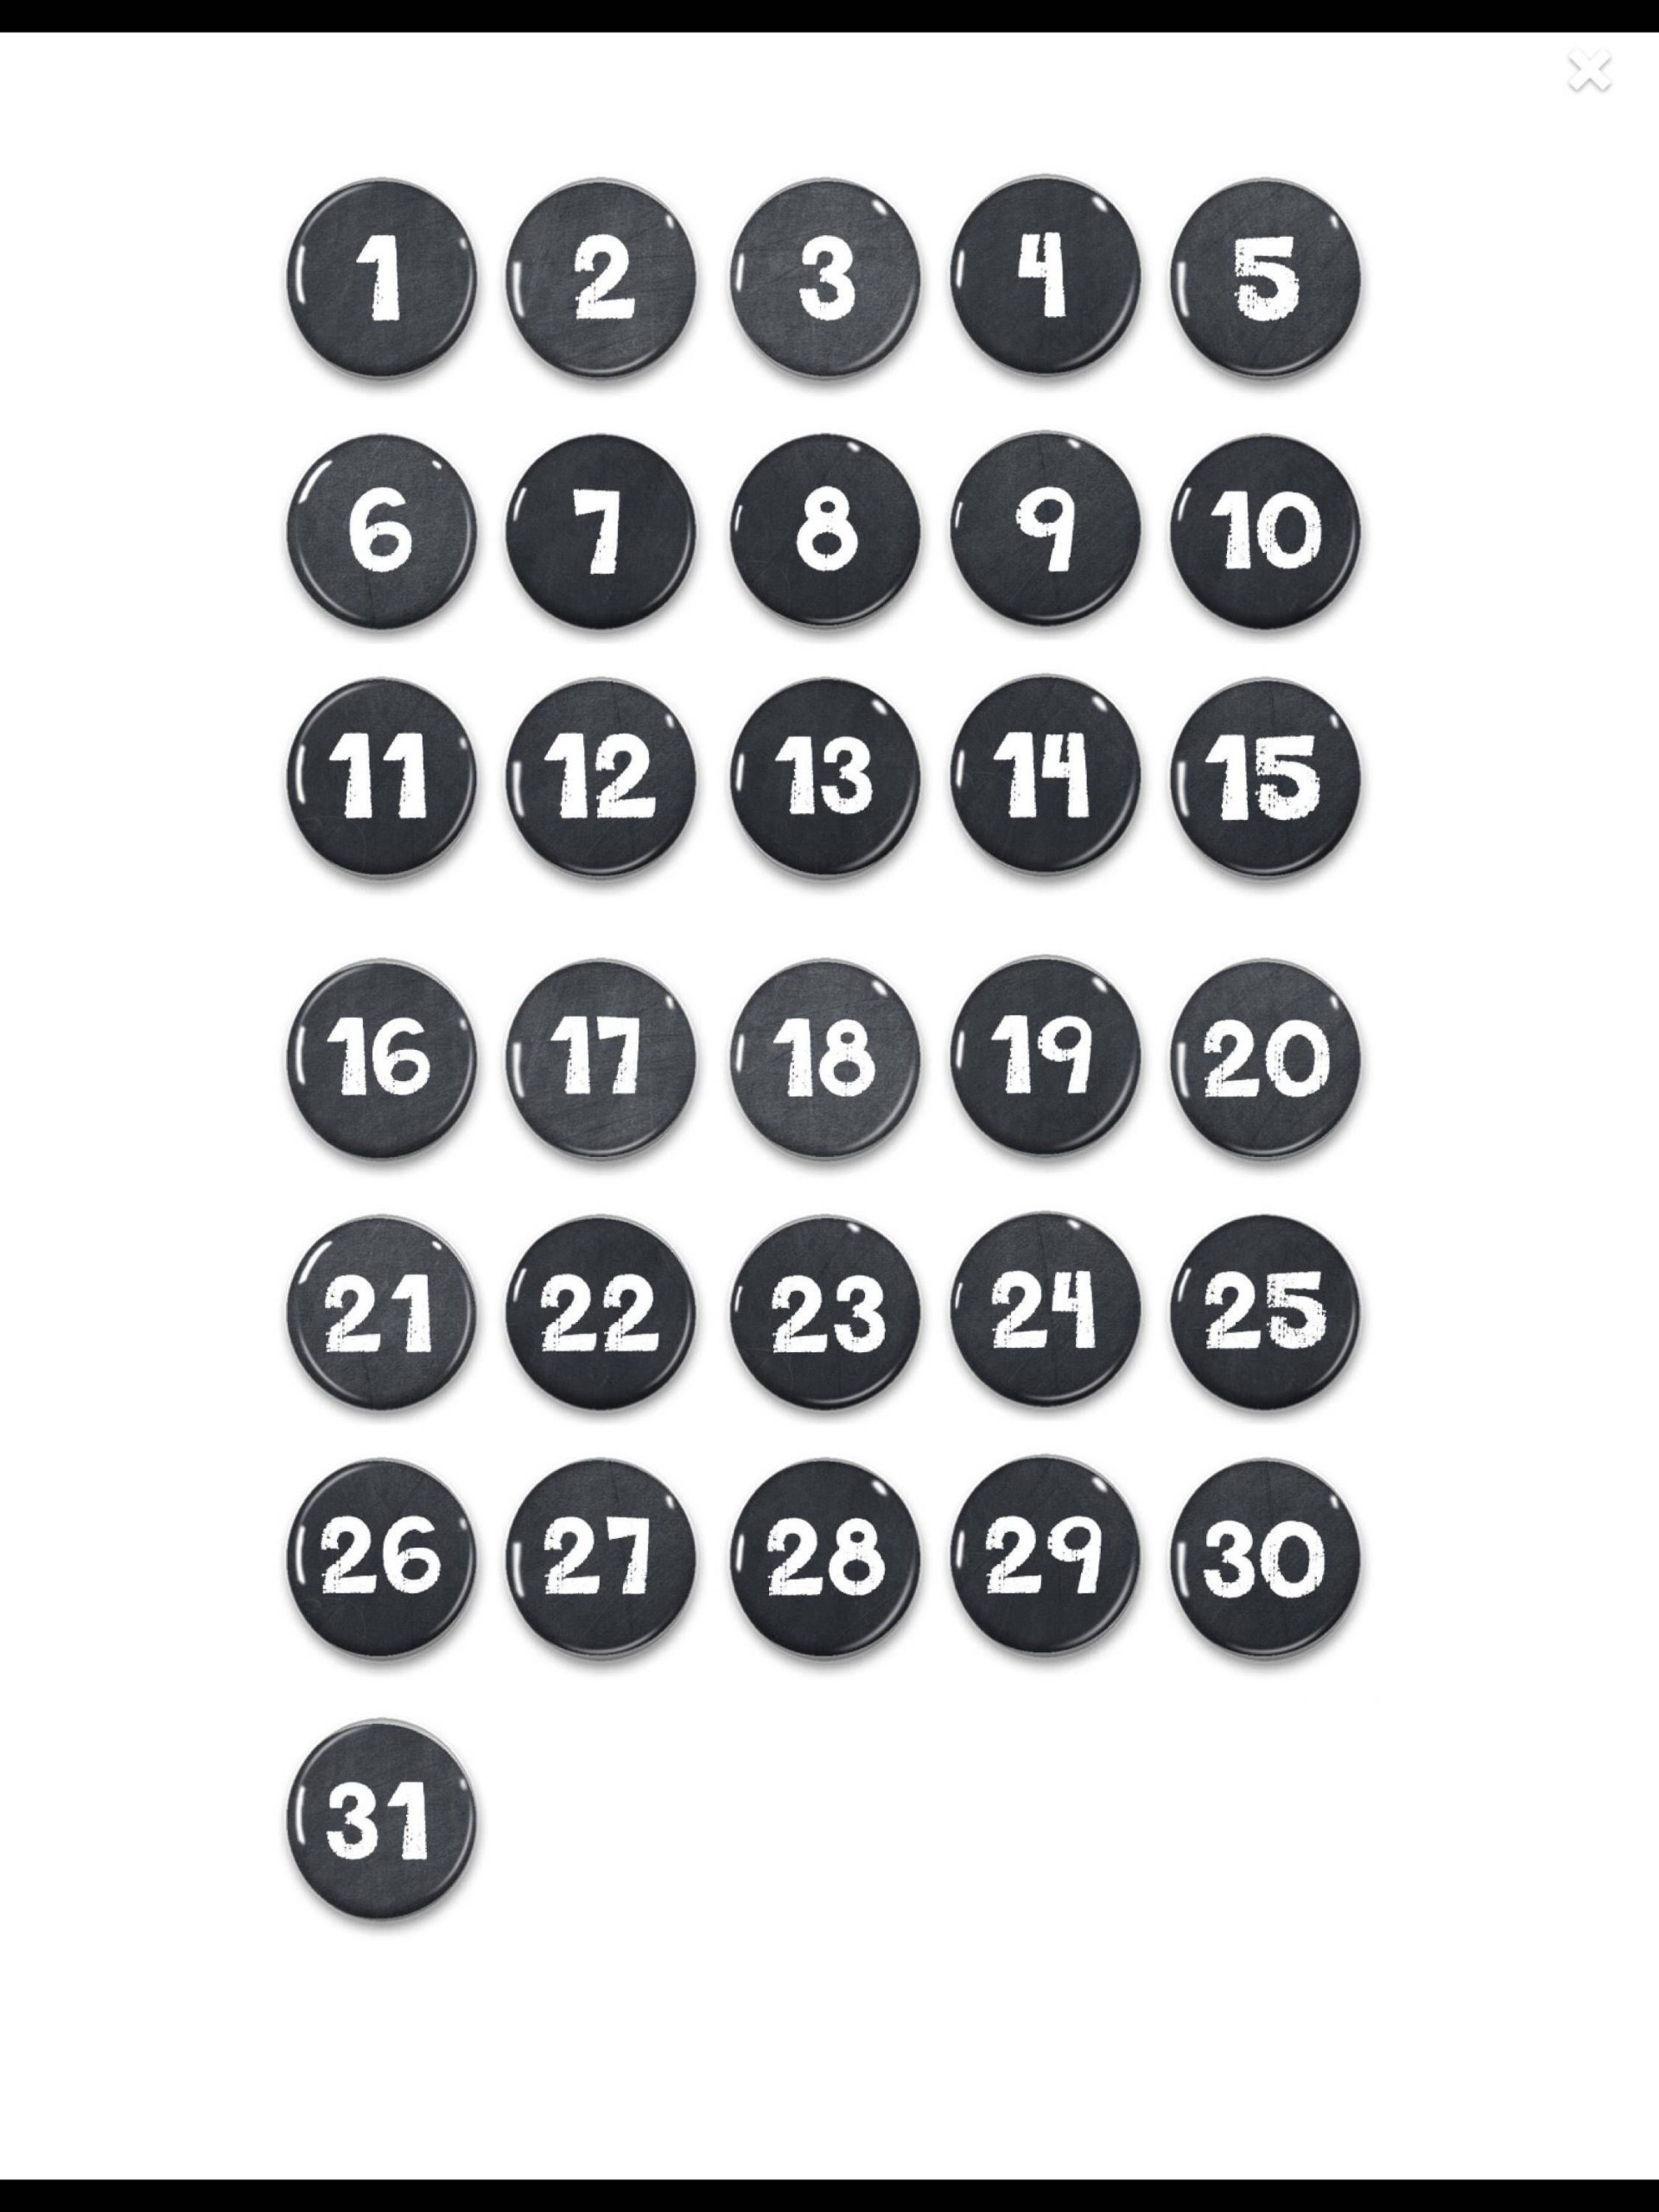 Chalkboard Number Magnets - Calendar Magnets - Counting